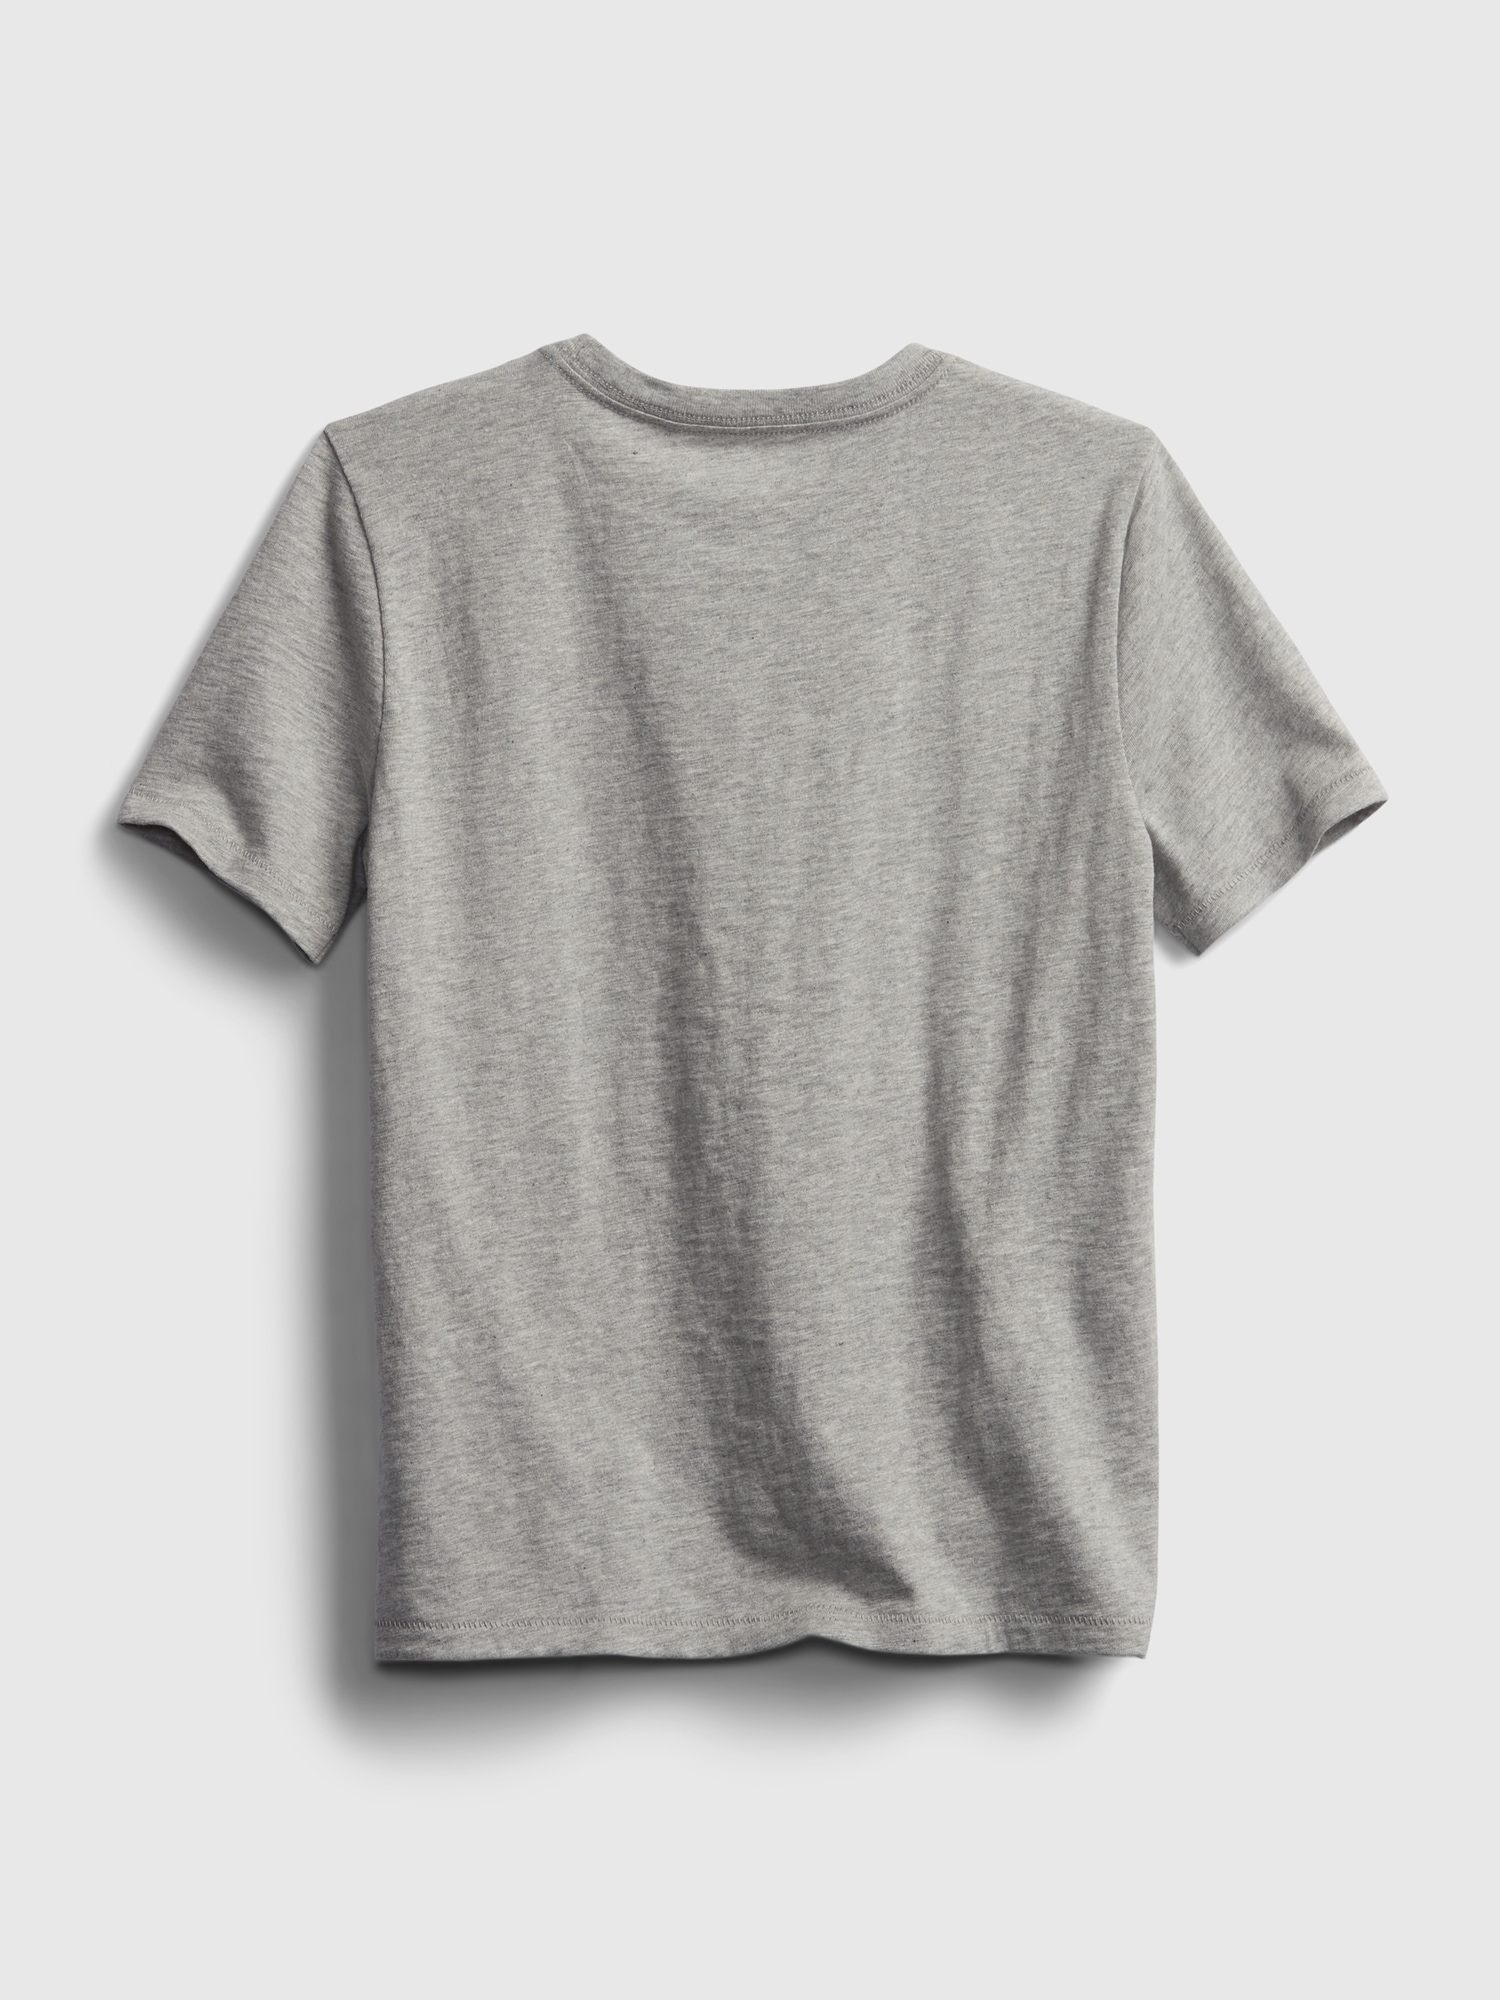 Buy STOP Grey Printed Cotton Round Neck Boys T-Shirt